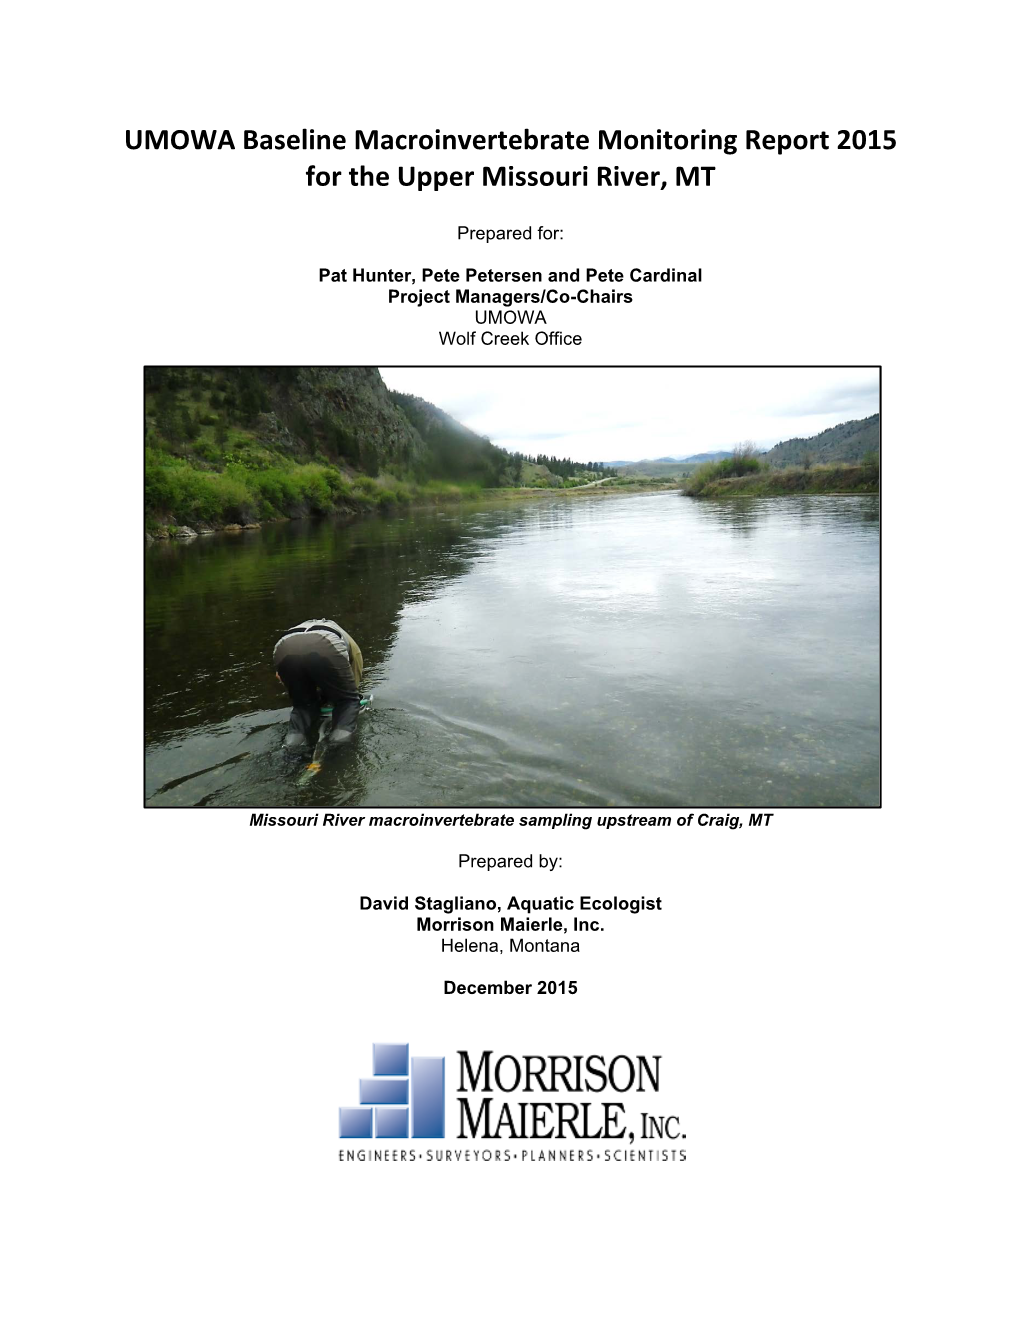 UMOWA Baseline Macroinvertebrate Monitoring Report 2015 for the Upper Missouri River, MT